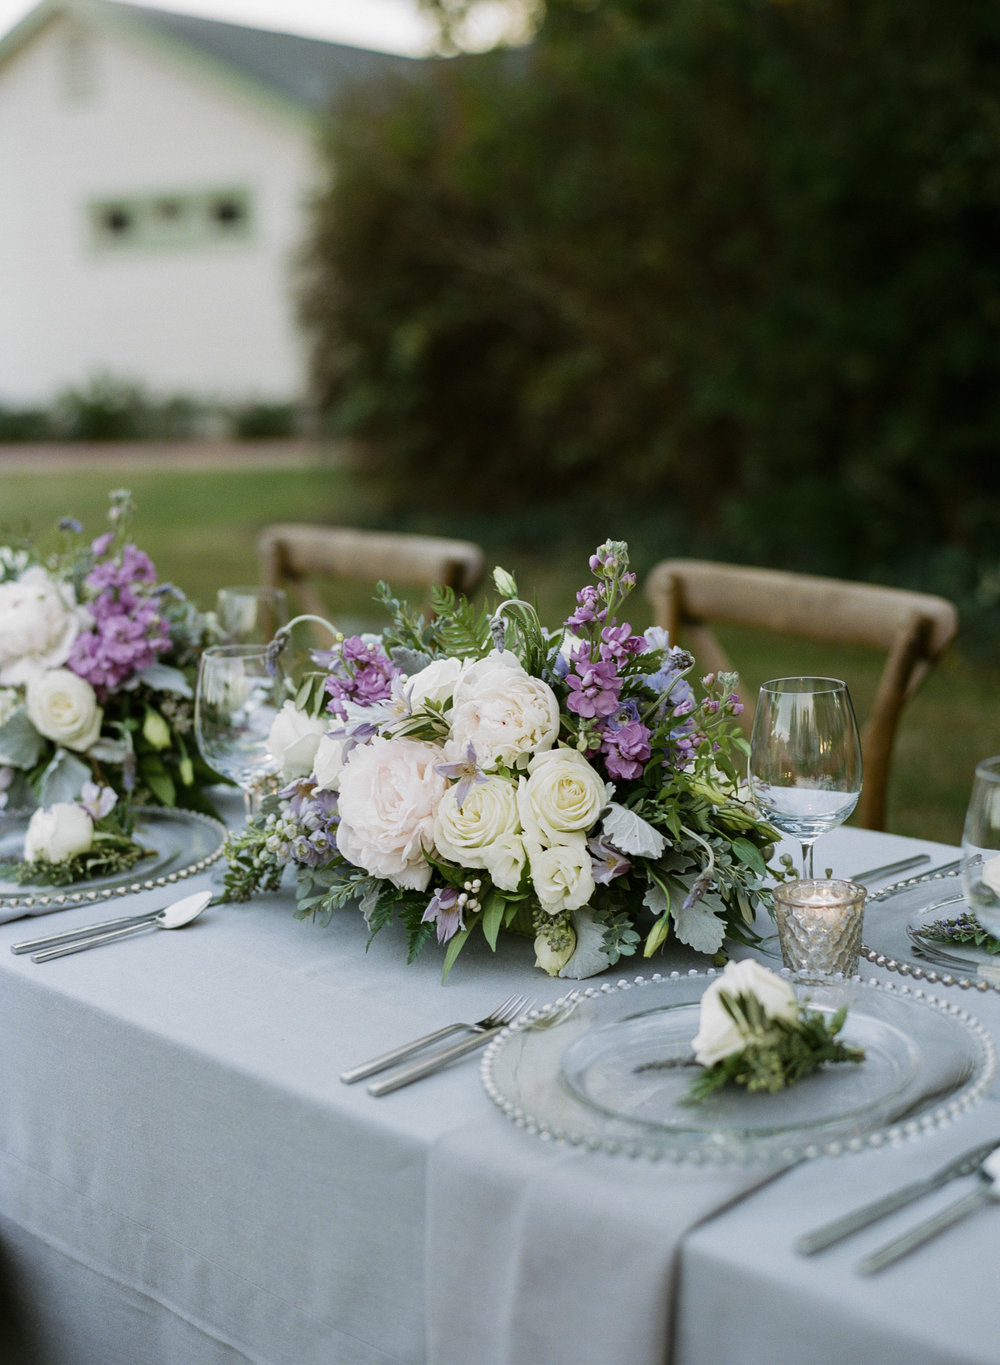 Violette-fleurs-roseville-sacramento-california-Flower-farm-inn-wedding-florist-upscale-design-tablescape.jpg